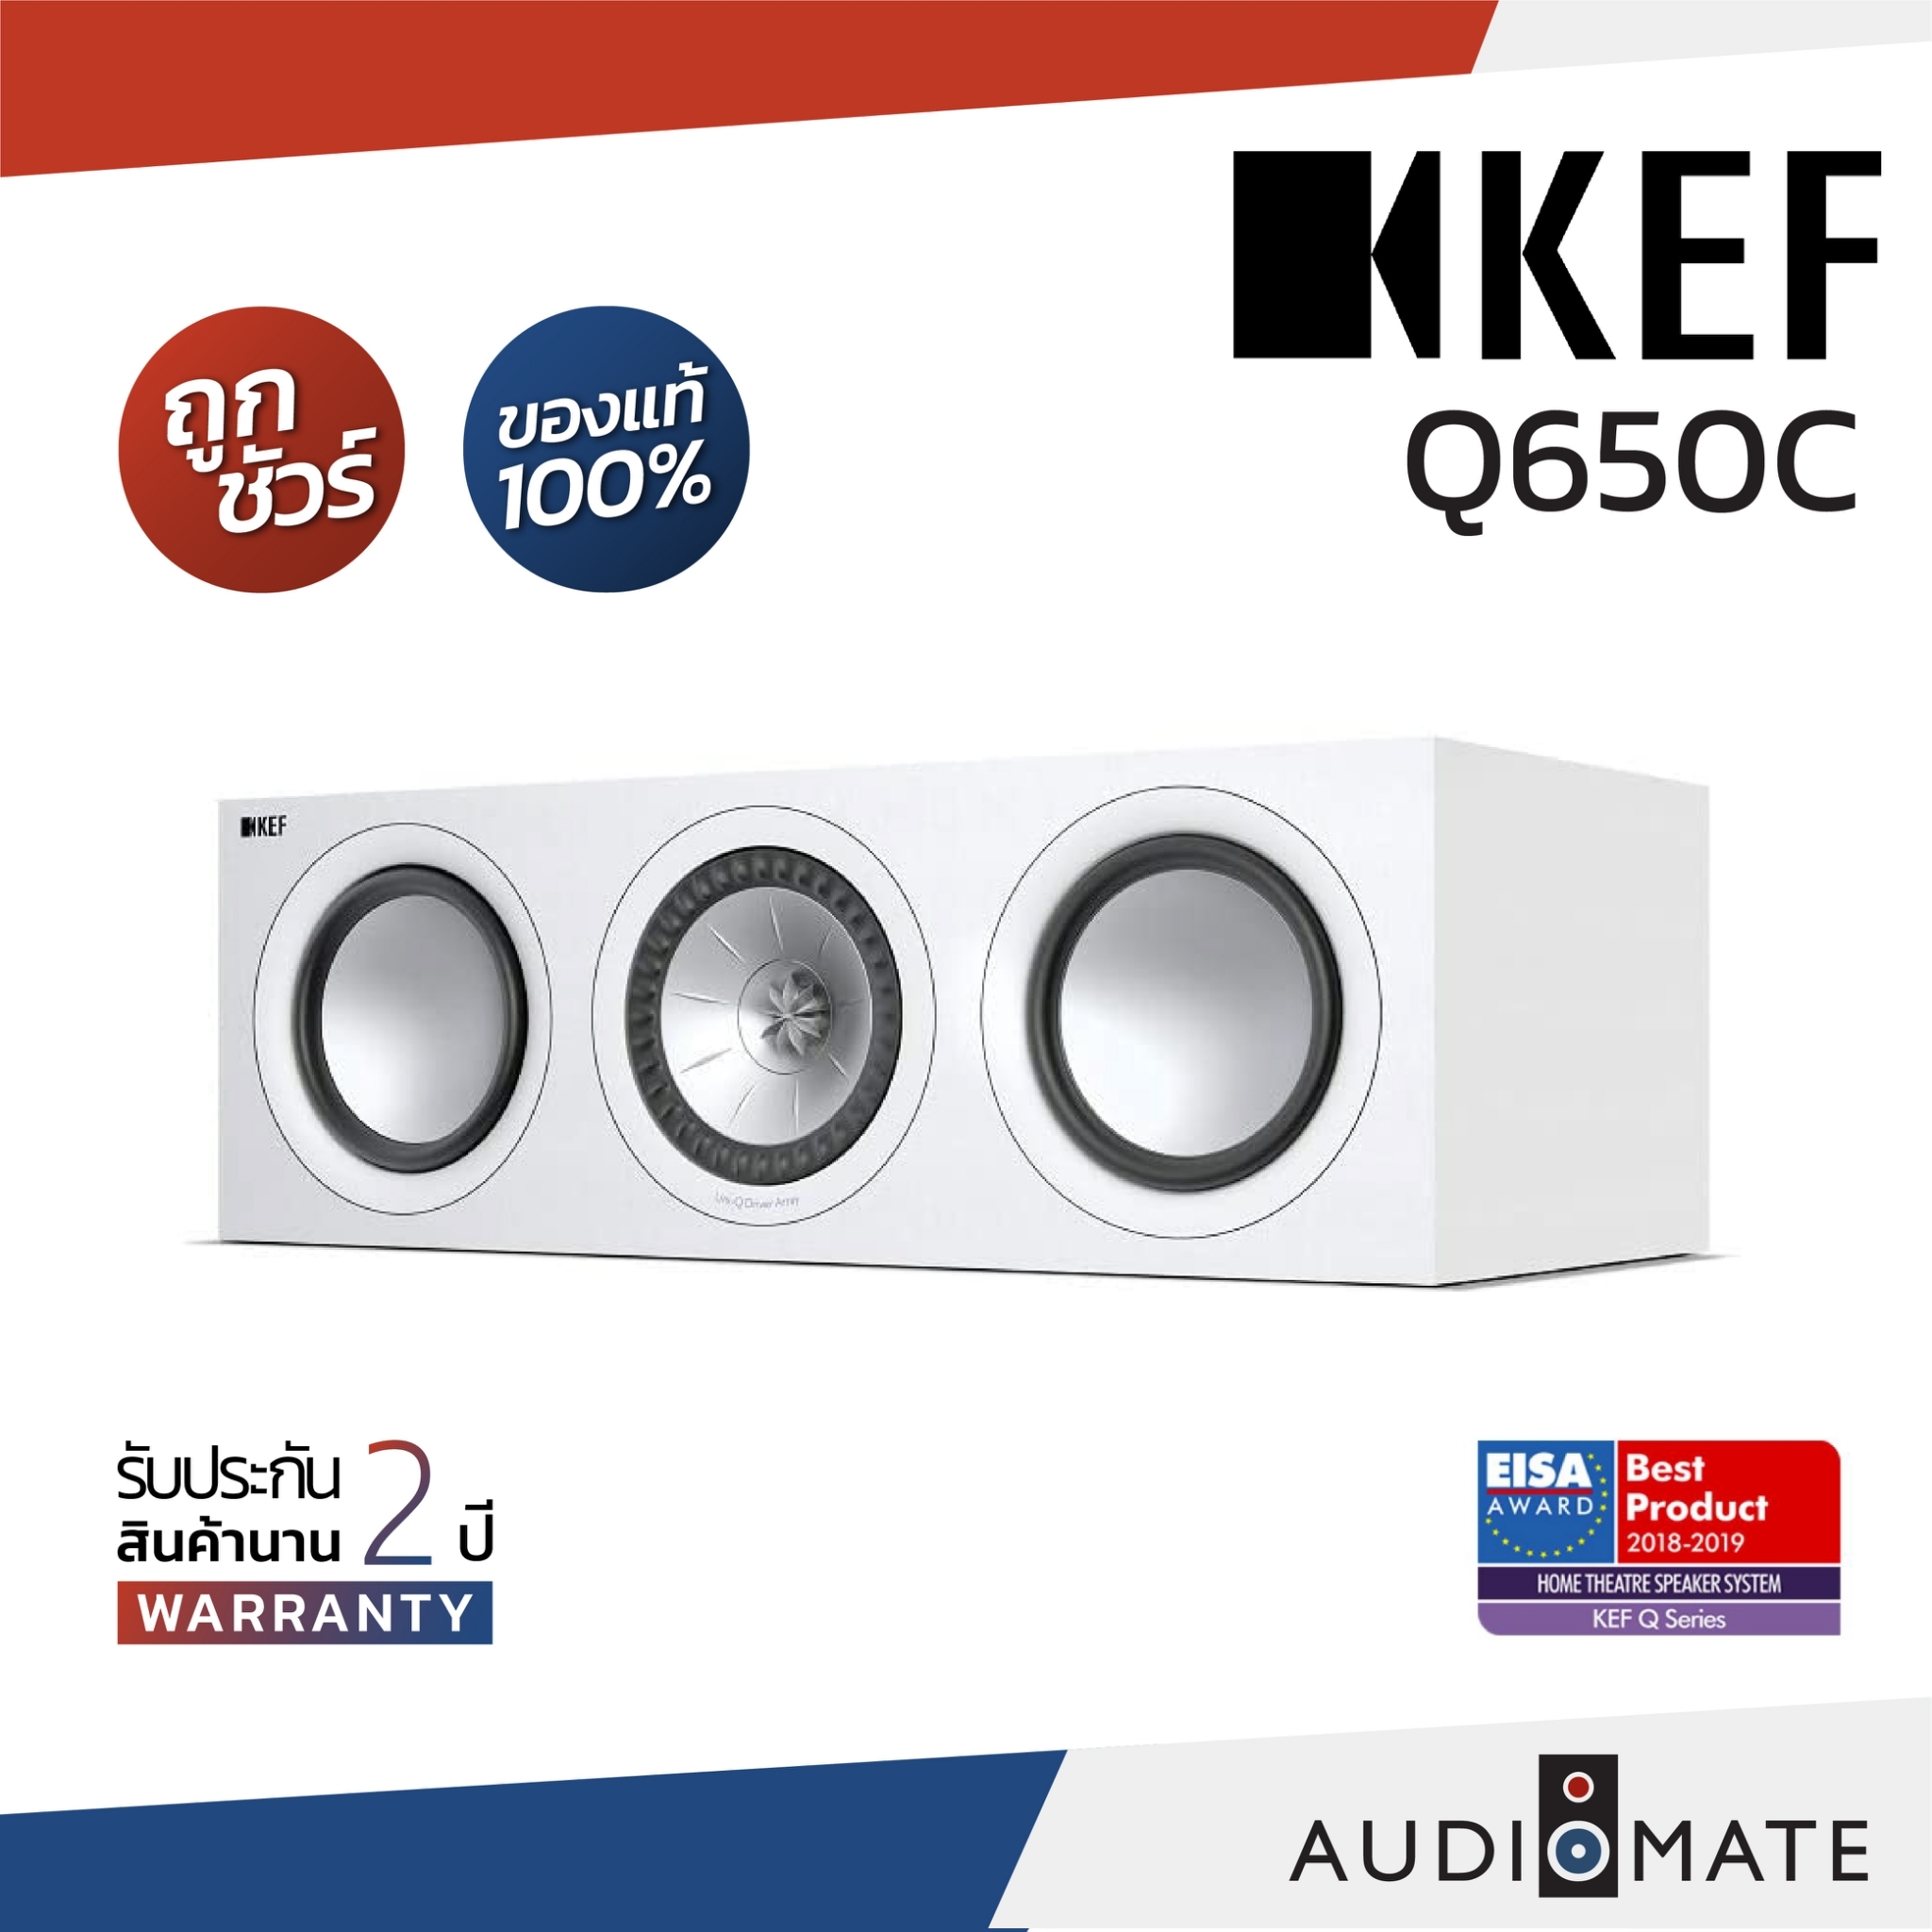 KEF Q650C SPEAKER / ลําโพง Center ยี่ห้อ Kef รุ่น Q 650 / รับประกัน 2 ปี โดย บริษัท Vgadz / AUDIOMATE